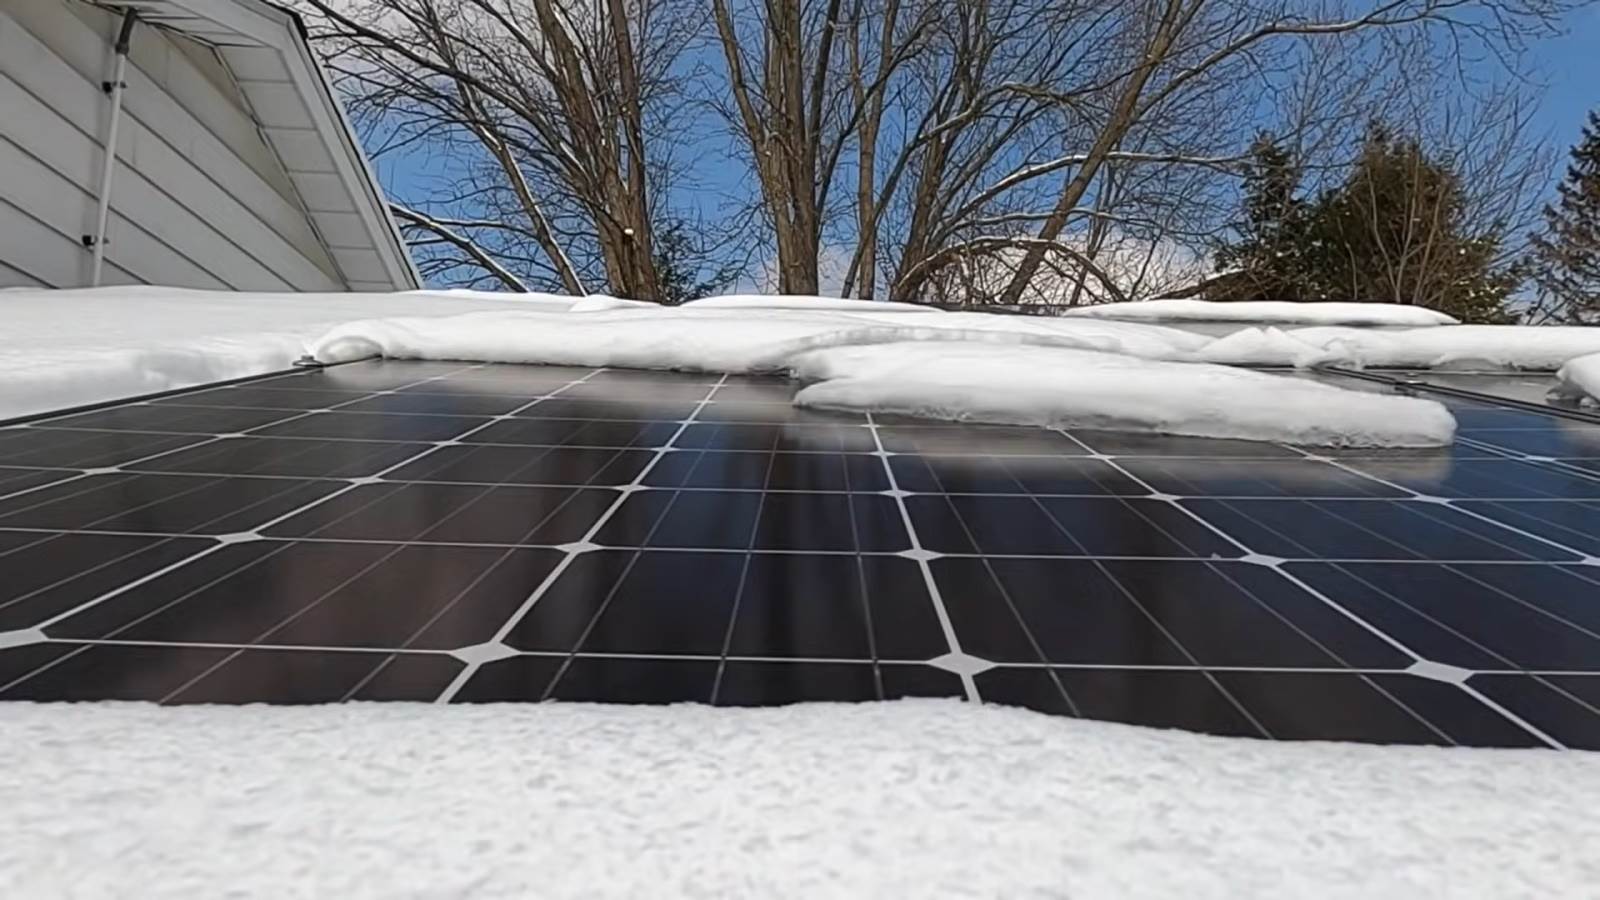  Sneg na solarnim panelima 